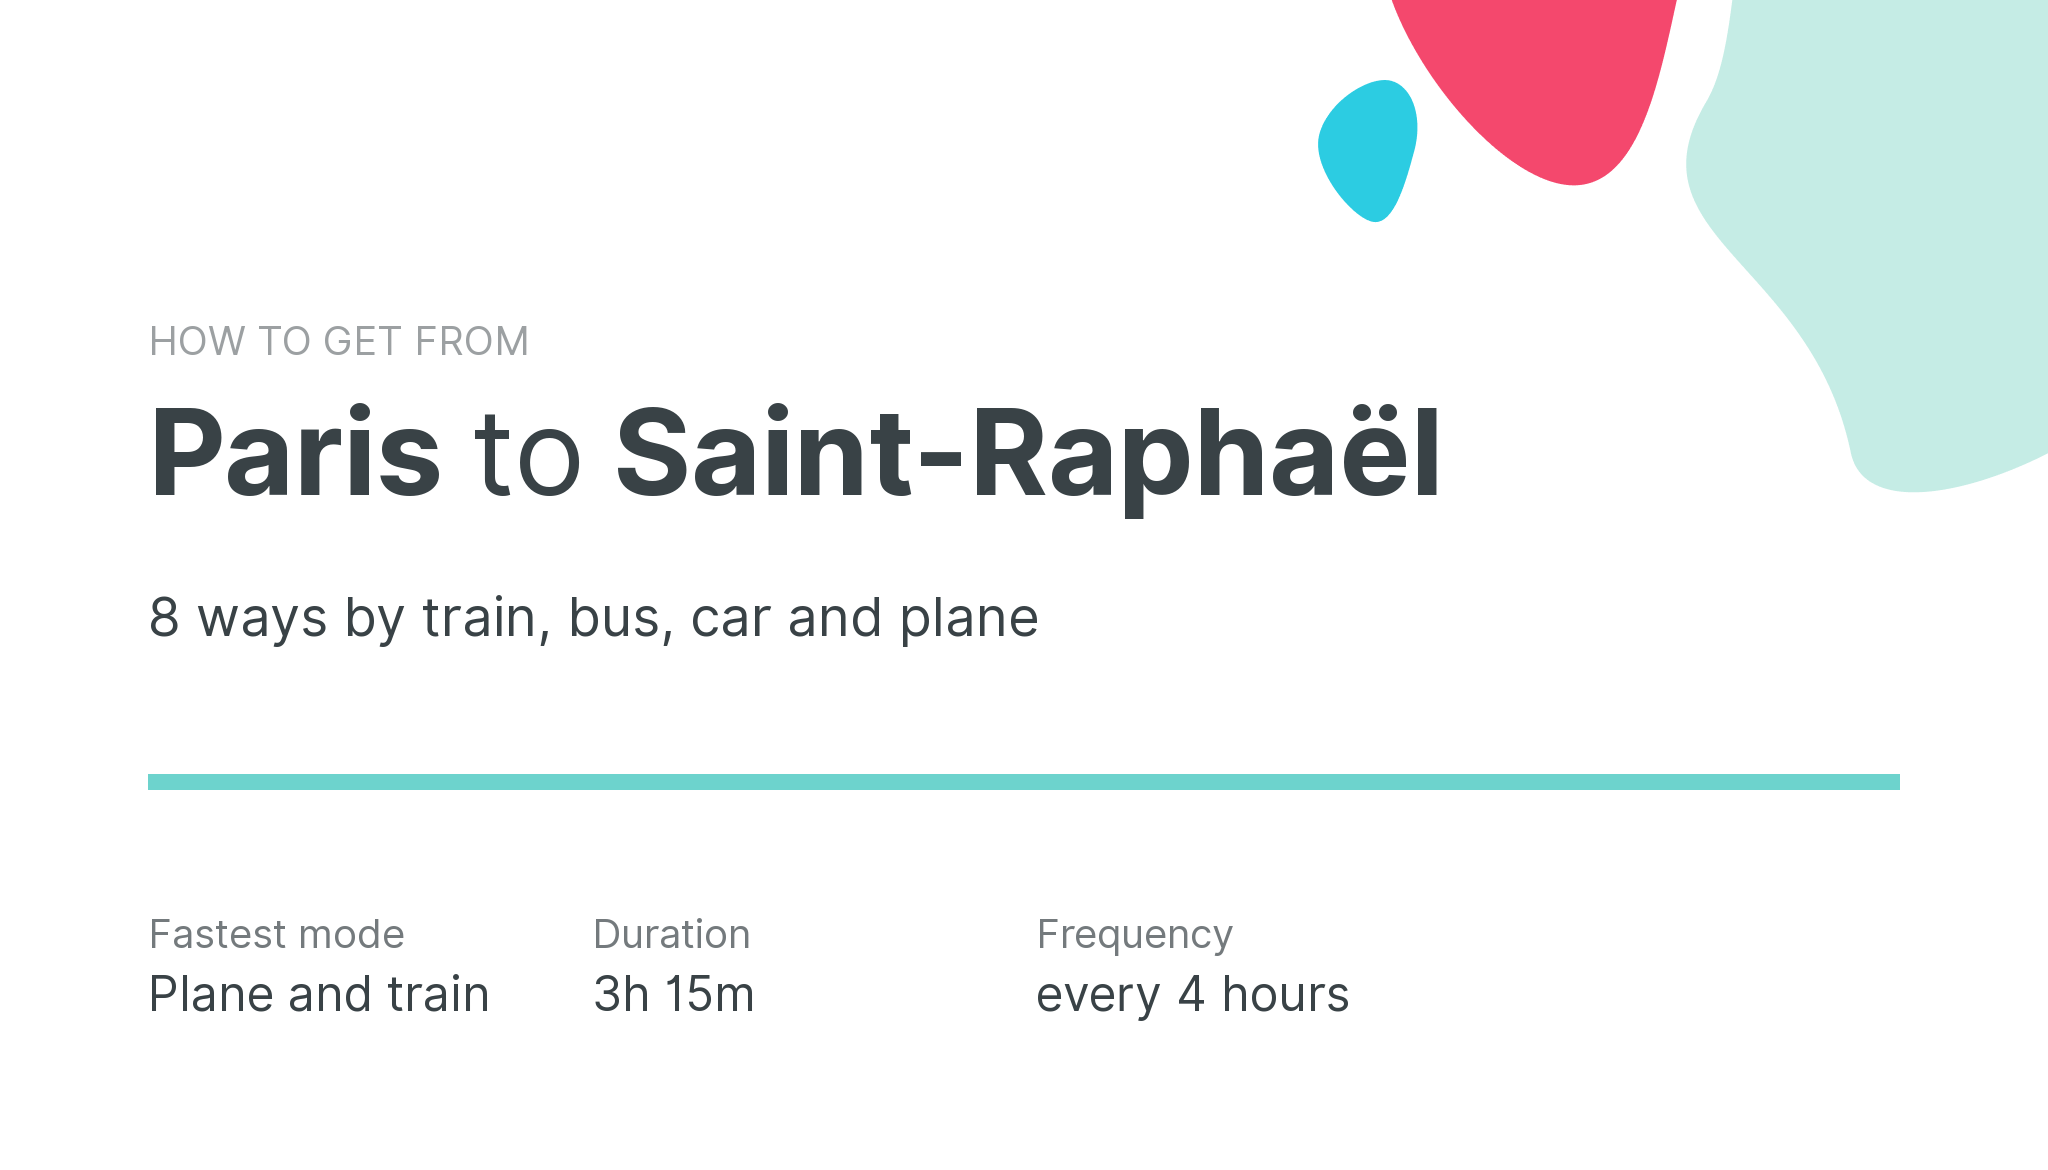 How do I get from Paris to Saint-Raphaël